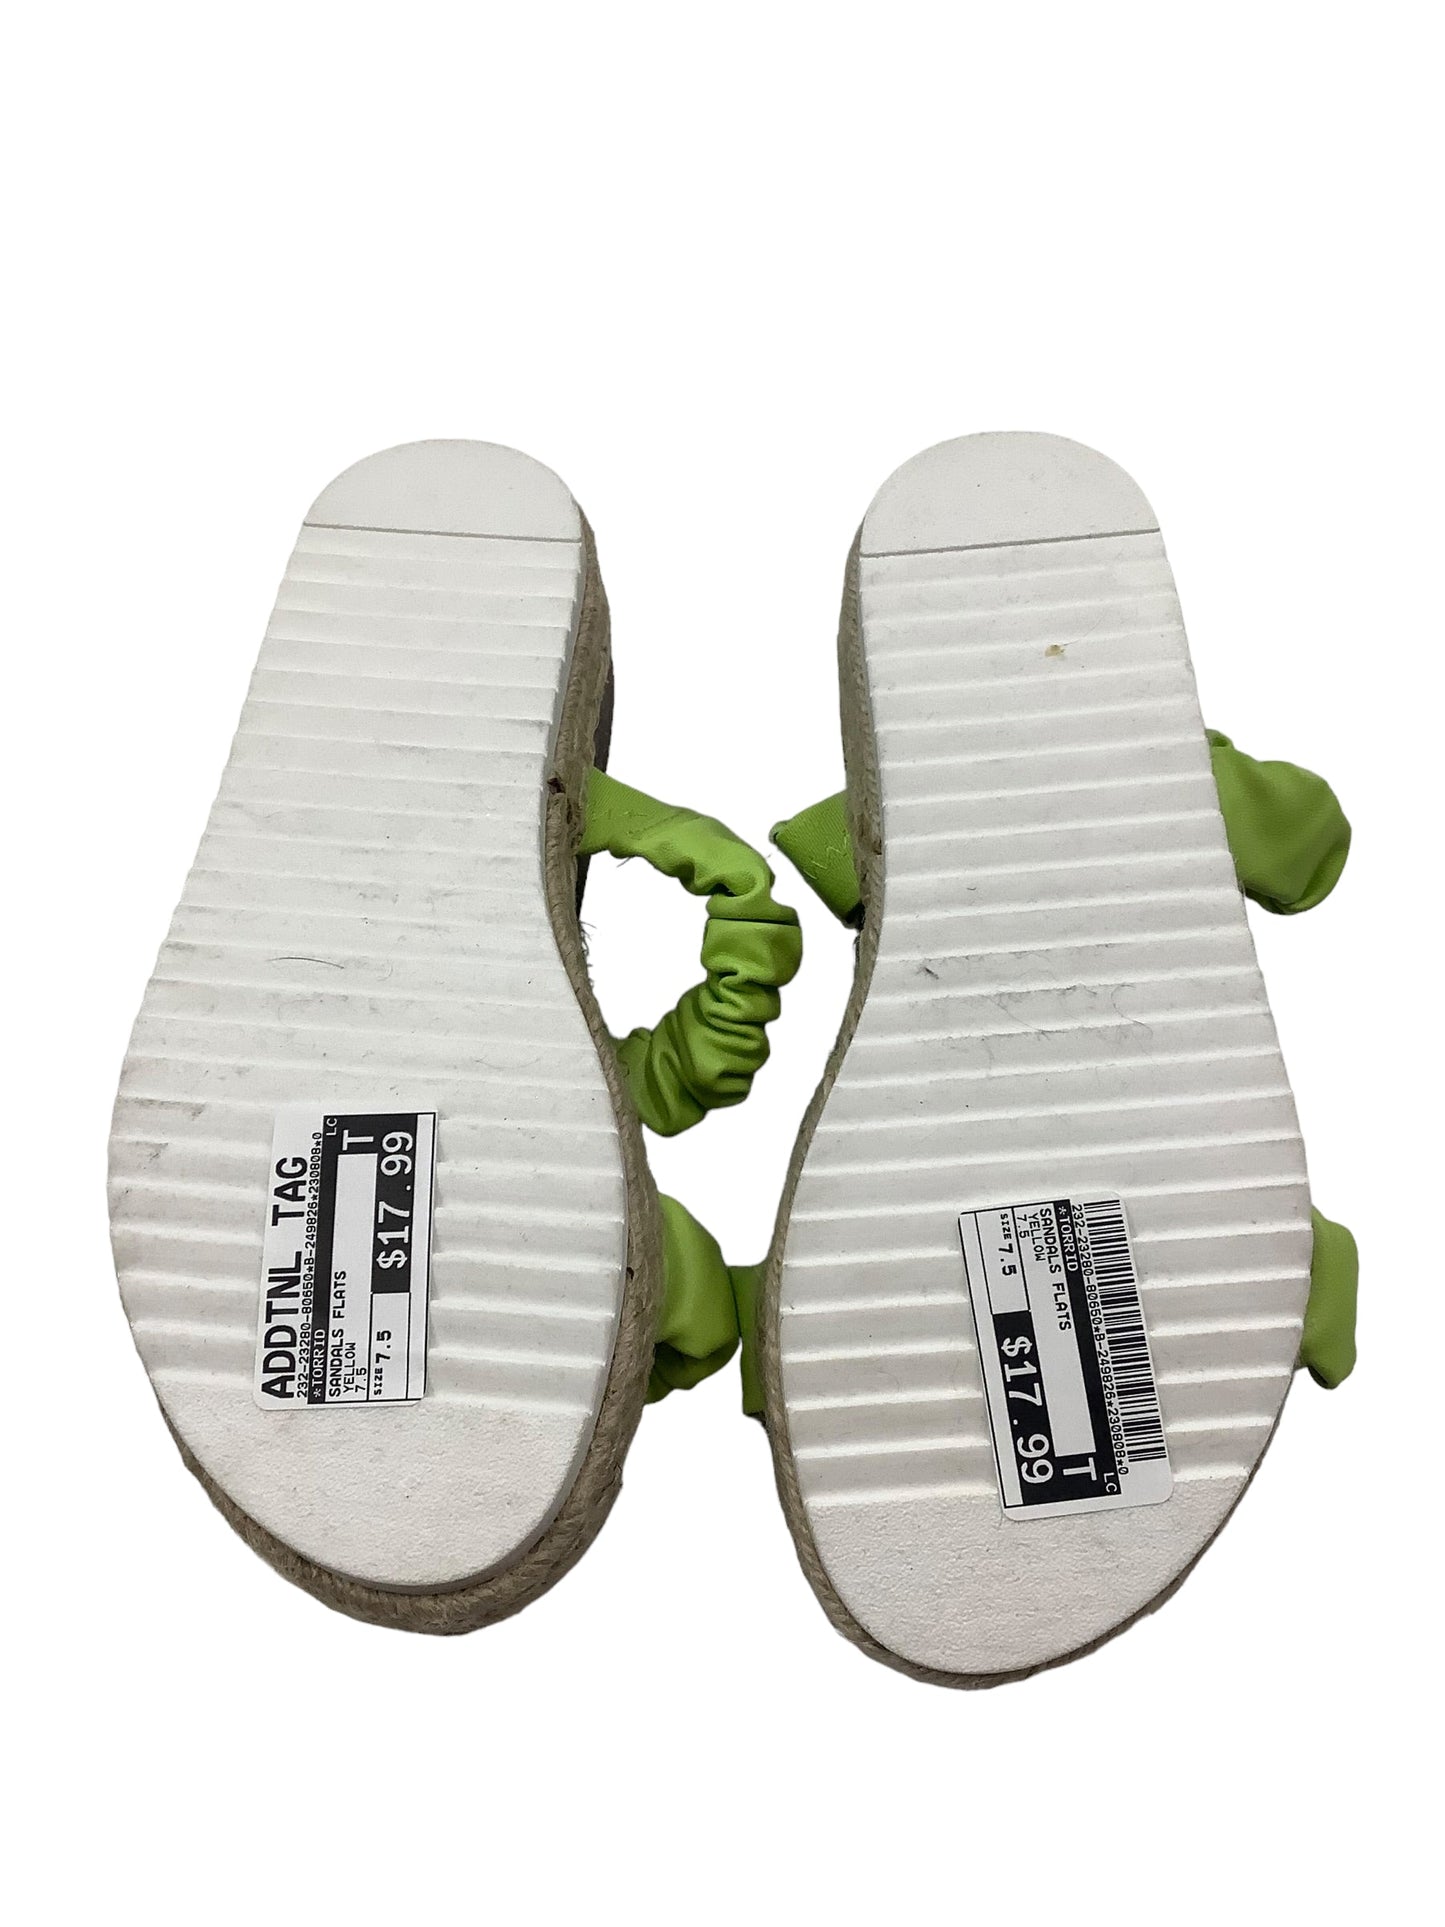 Sandals Flats By Torrid  Size: 7.5